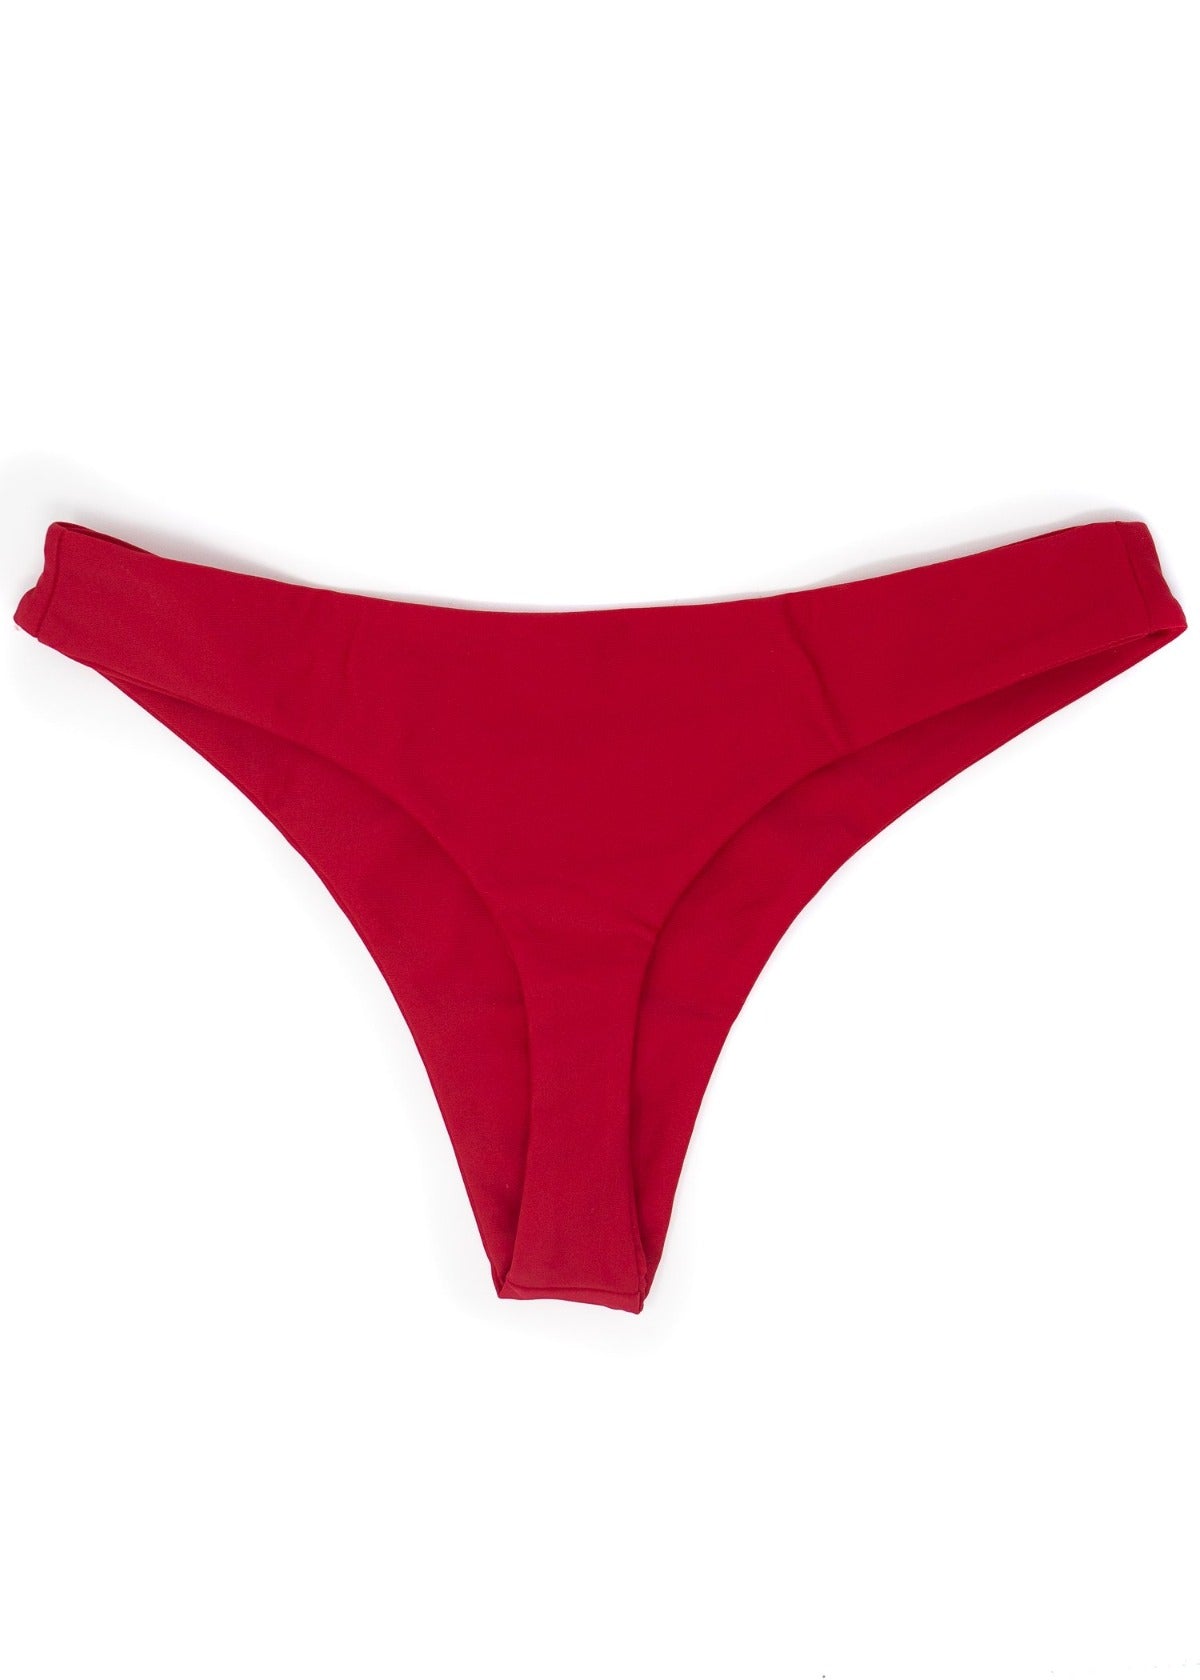 Hawaii sustainable red bikini bottoms